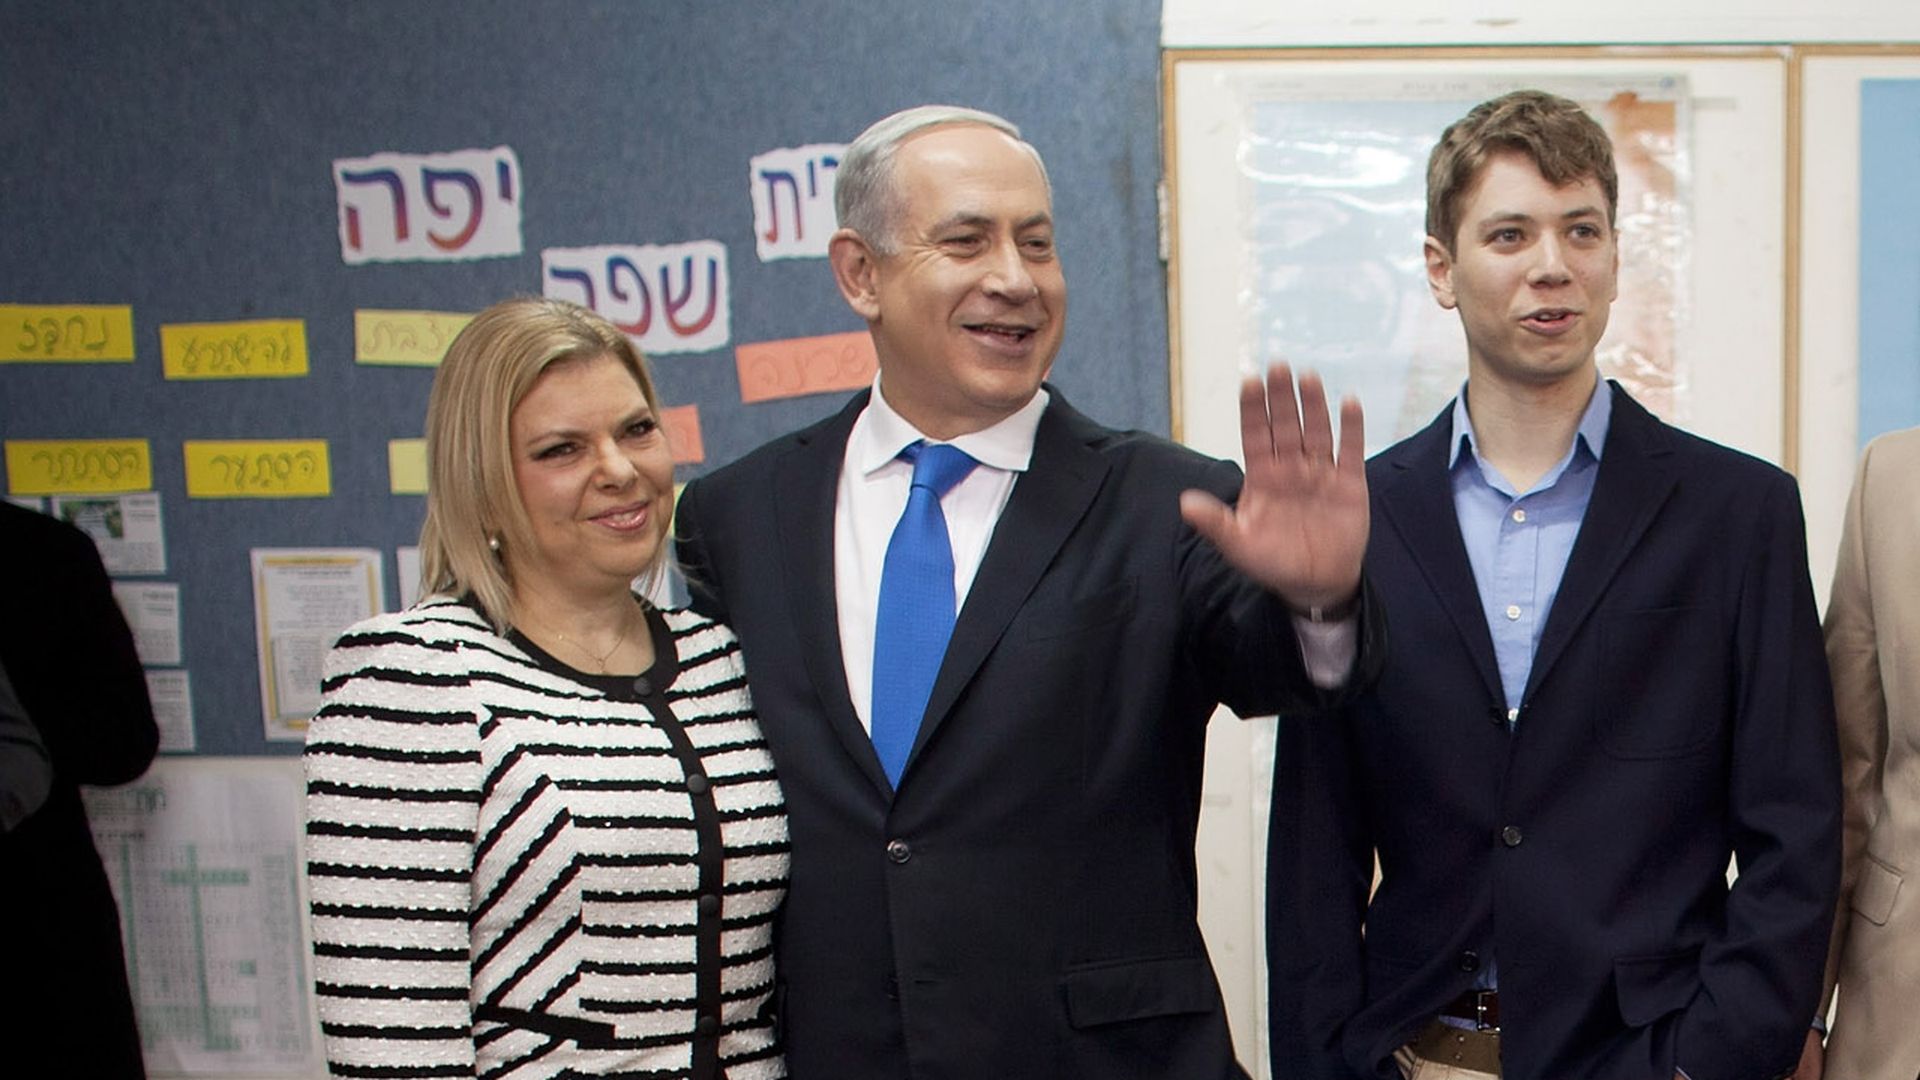  Israeli Prime Minister Benjamin Netanyahu, his wife Sara Netanyahu and son Yair Netanyahu